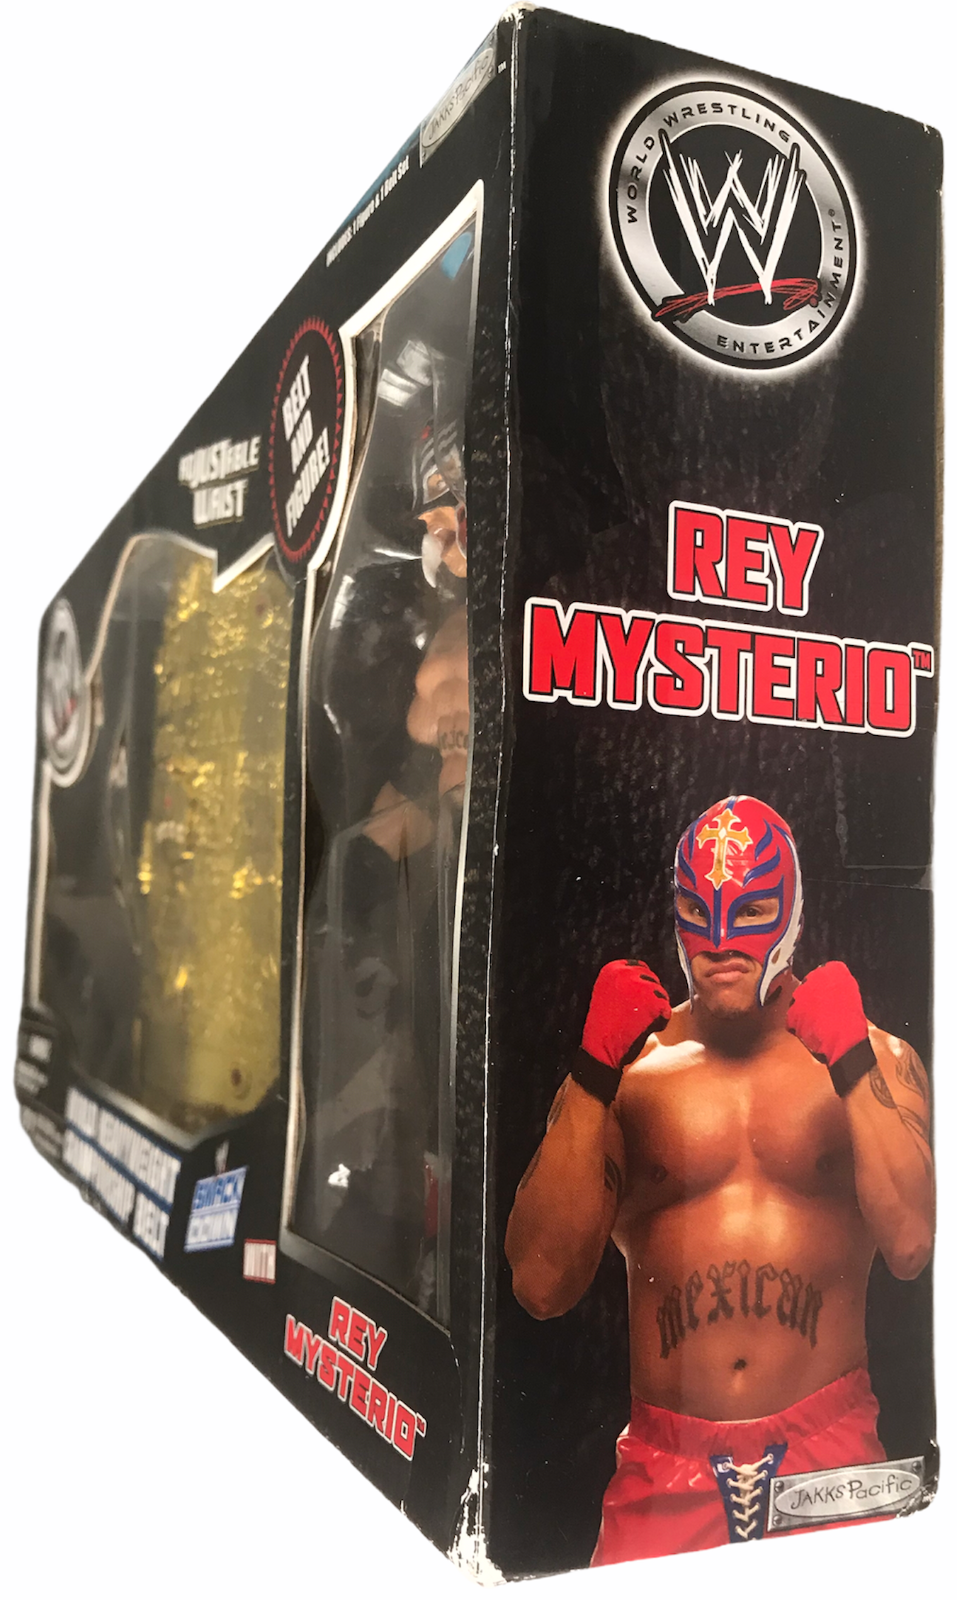 2006 WWE Jakks Pacific World Heavyweight Championship Belt [With Rey Mysterio]